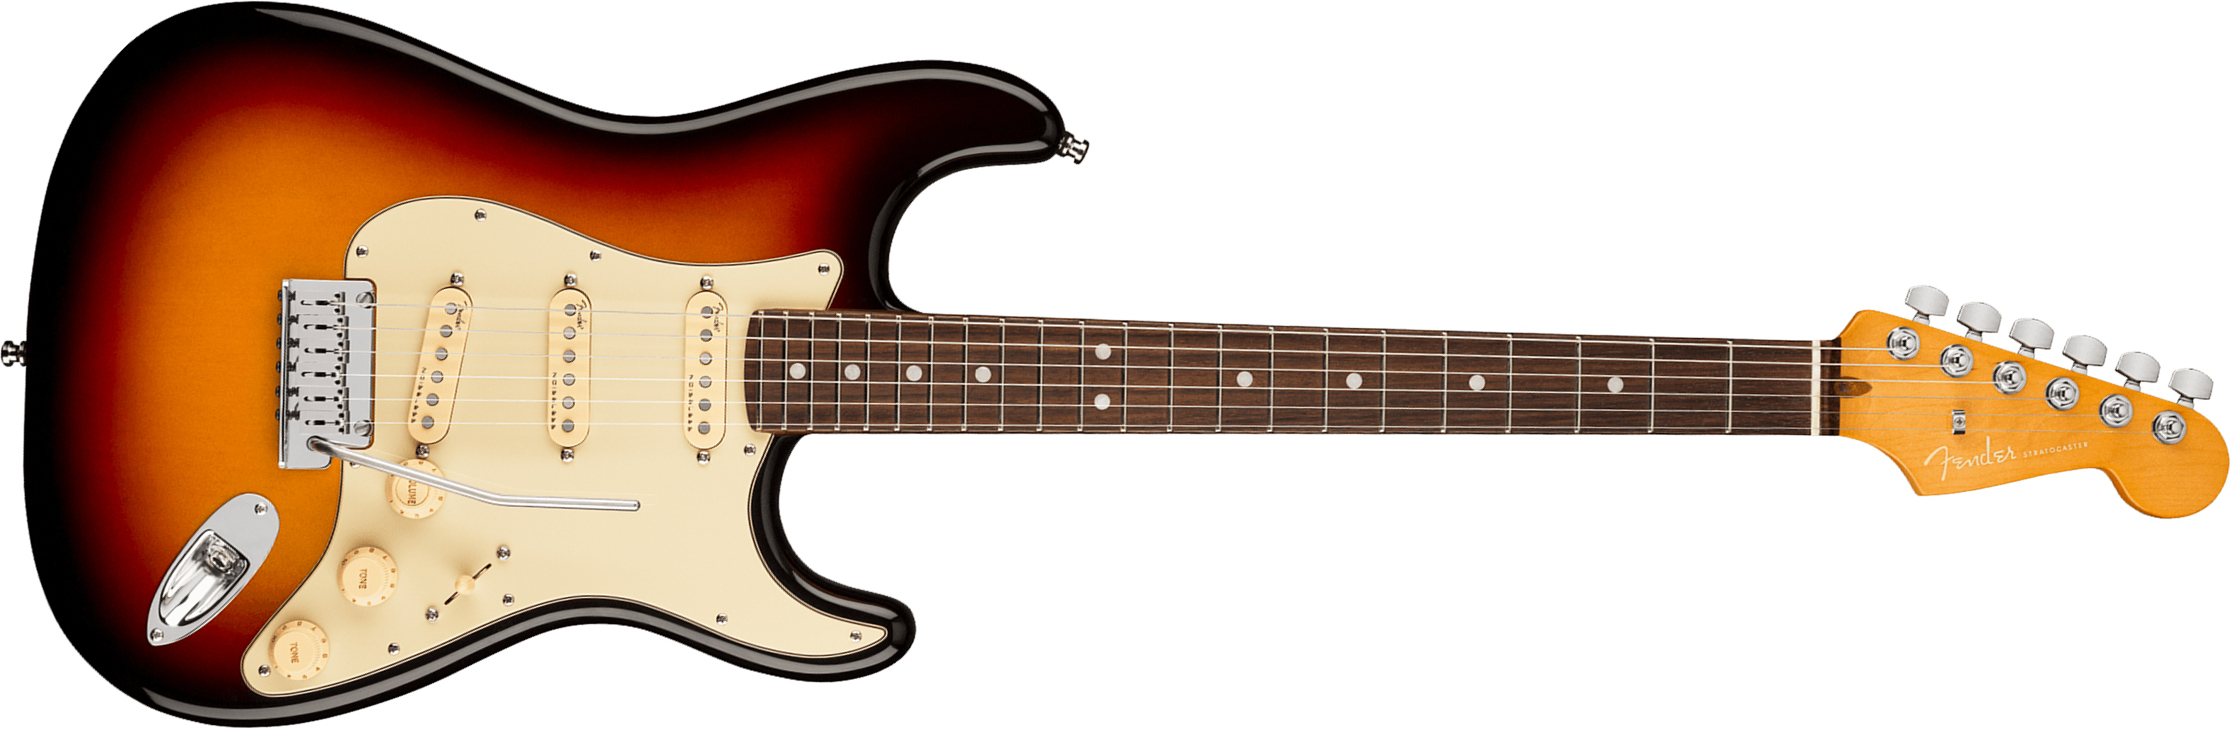 Fender Strat American Ultra 2019 Usa Rw - Ultraburst - Guitare Électrique Forme Str - Main picture